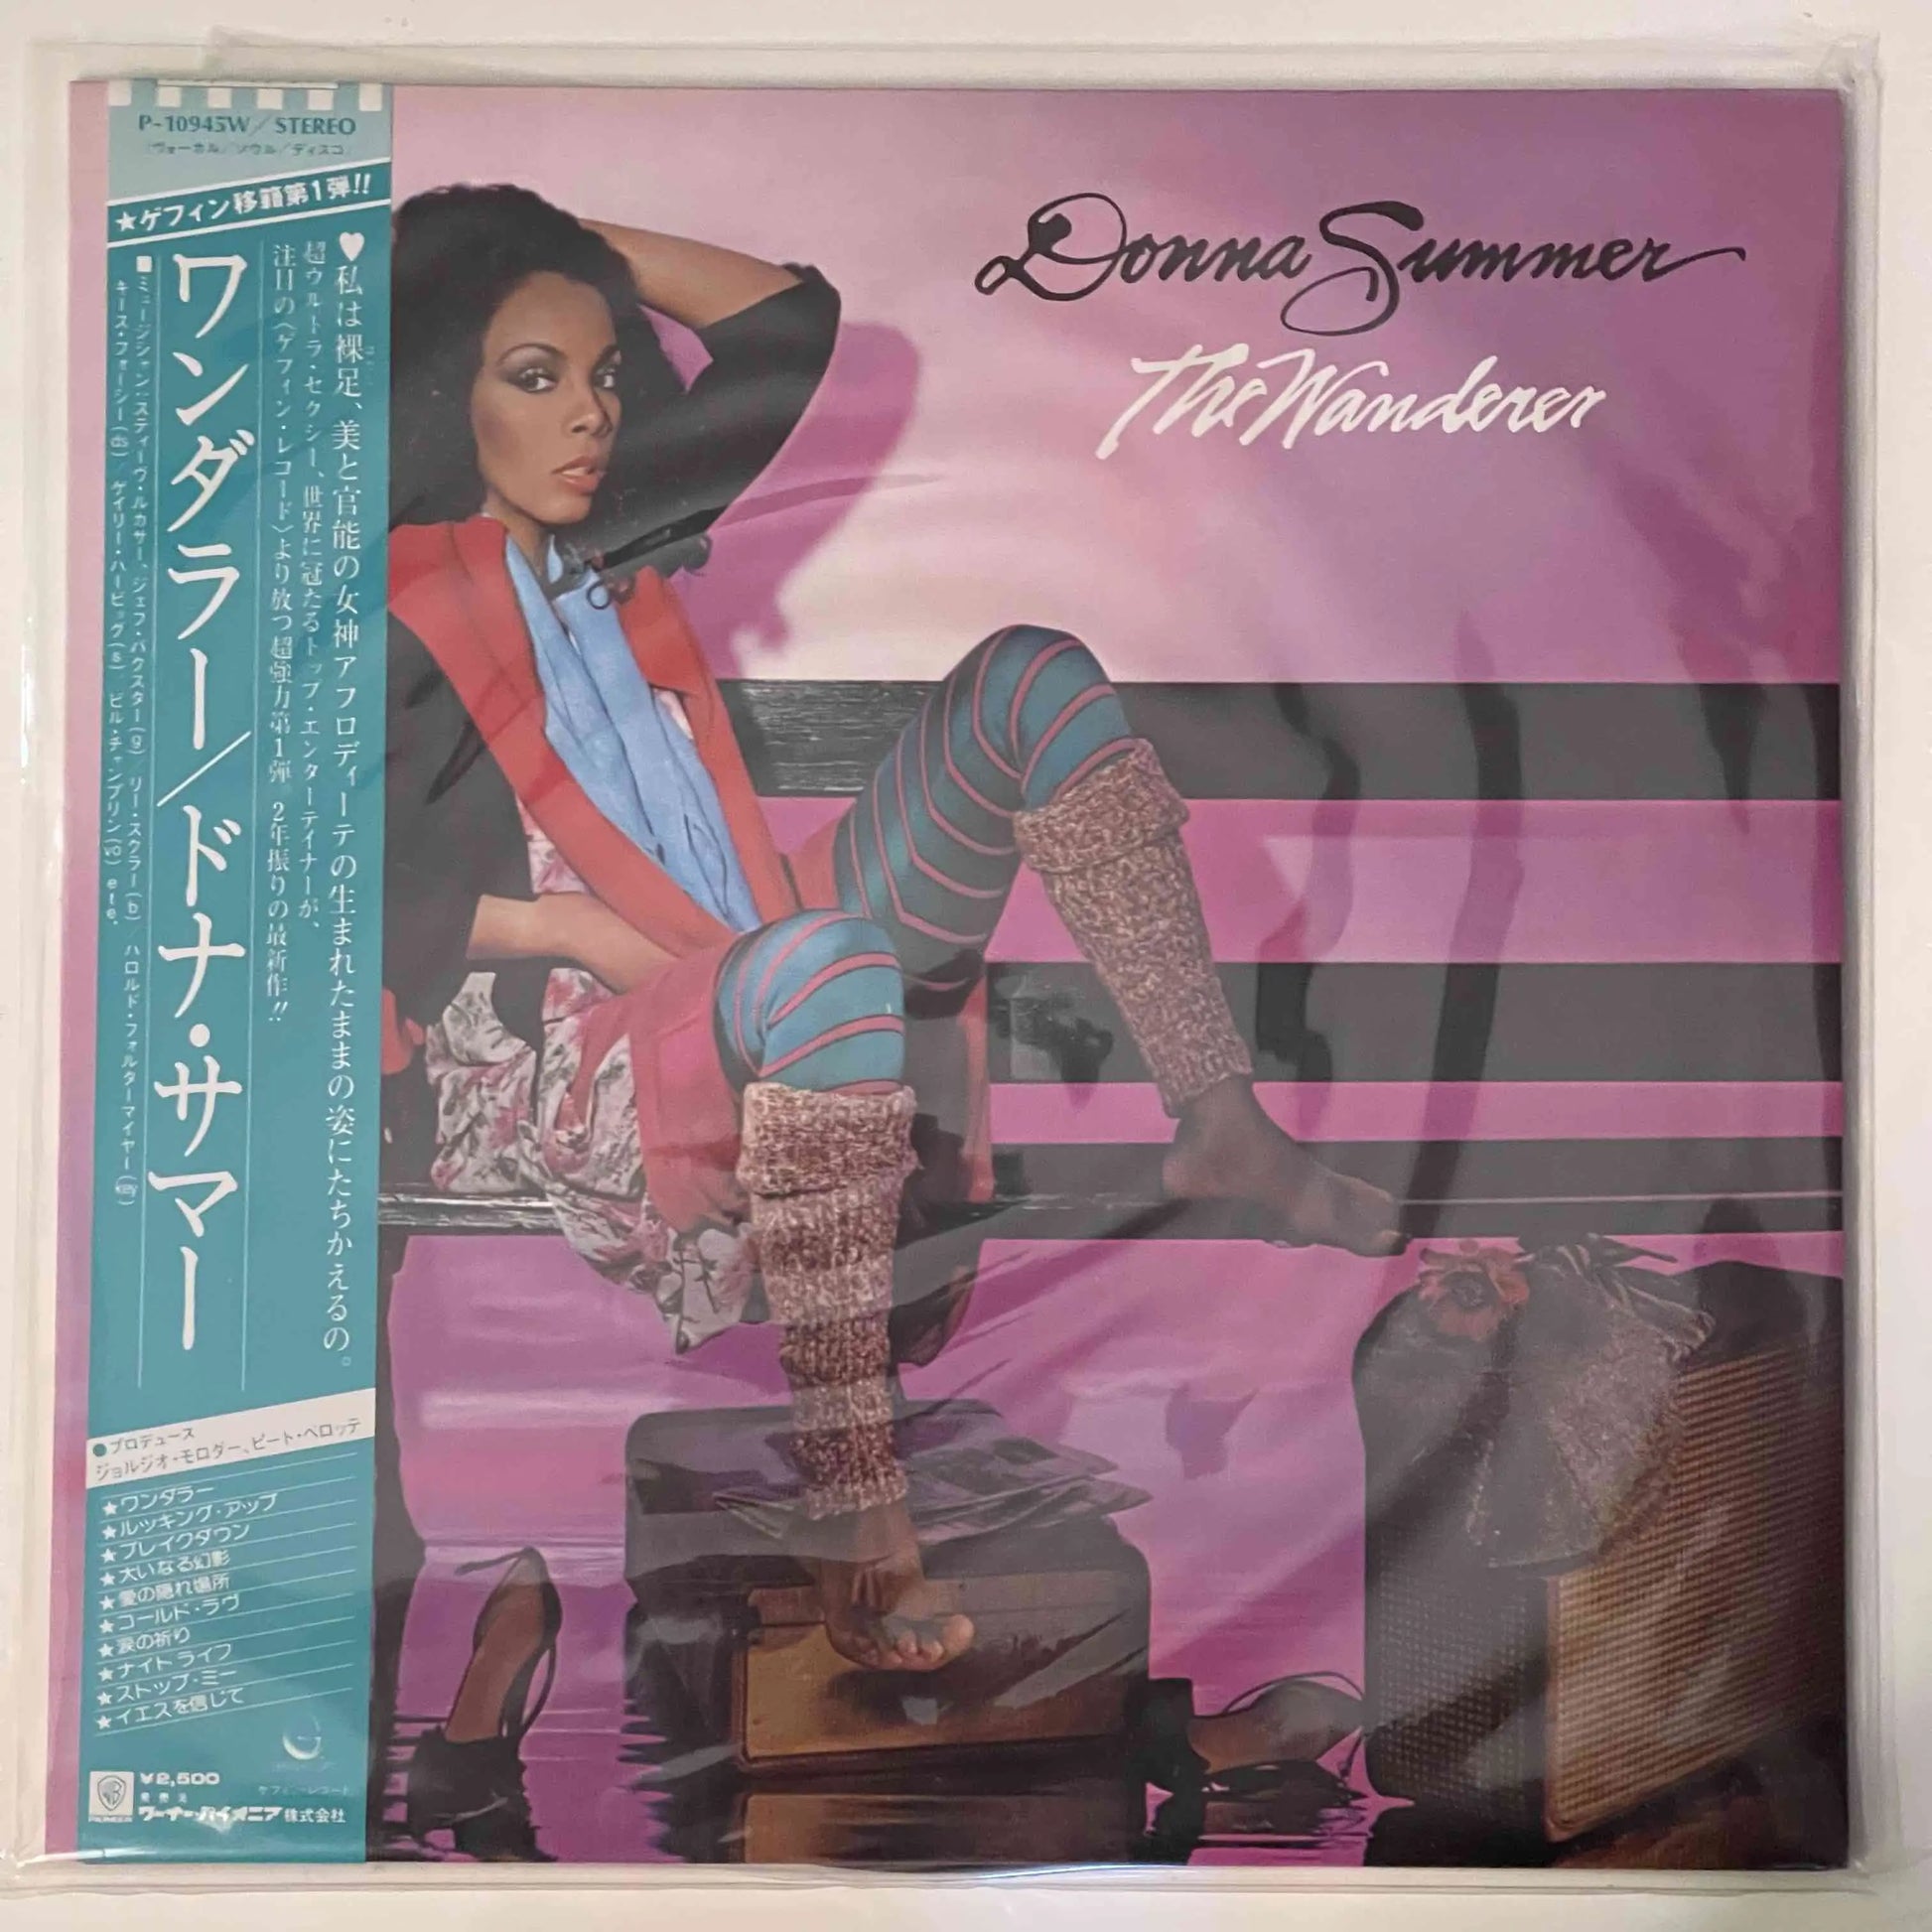 Donna Summer - The Wanderer [Original Japanese Pressing Vinyl LP]